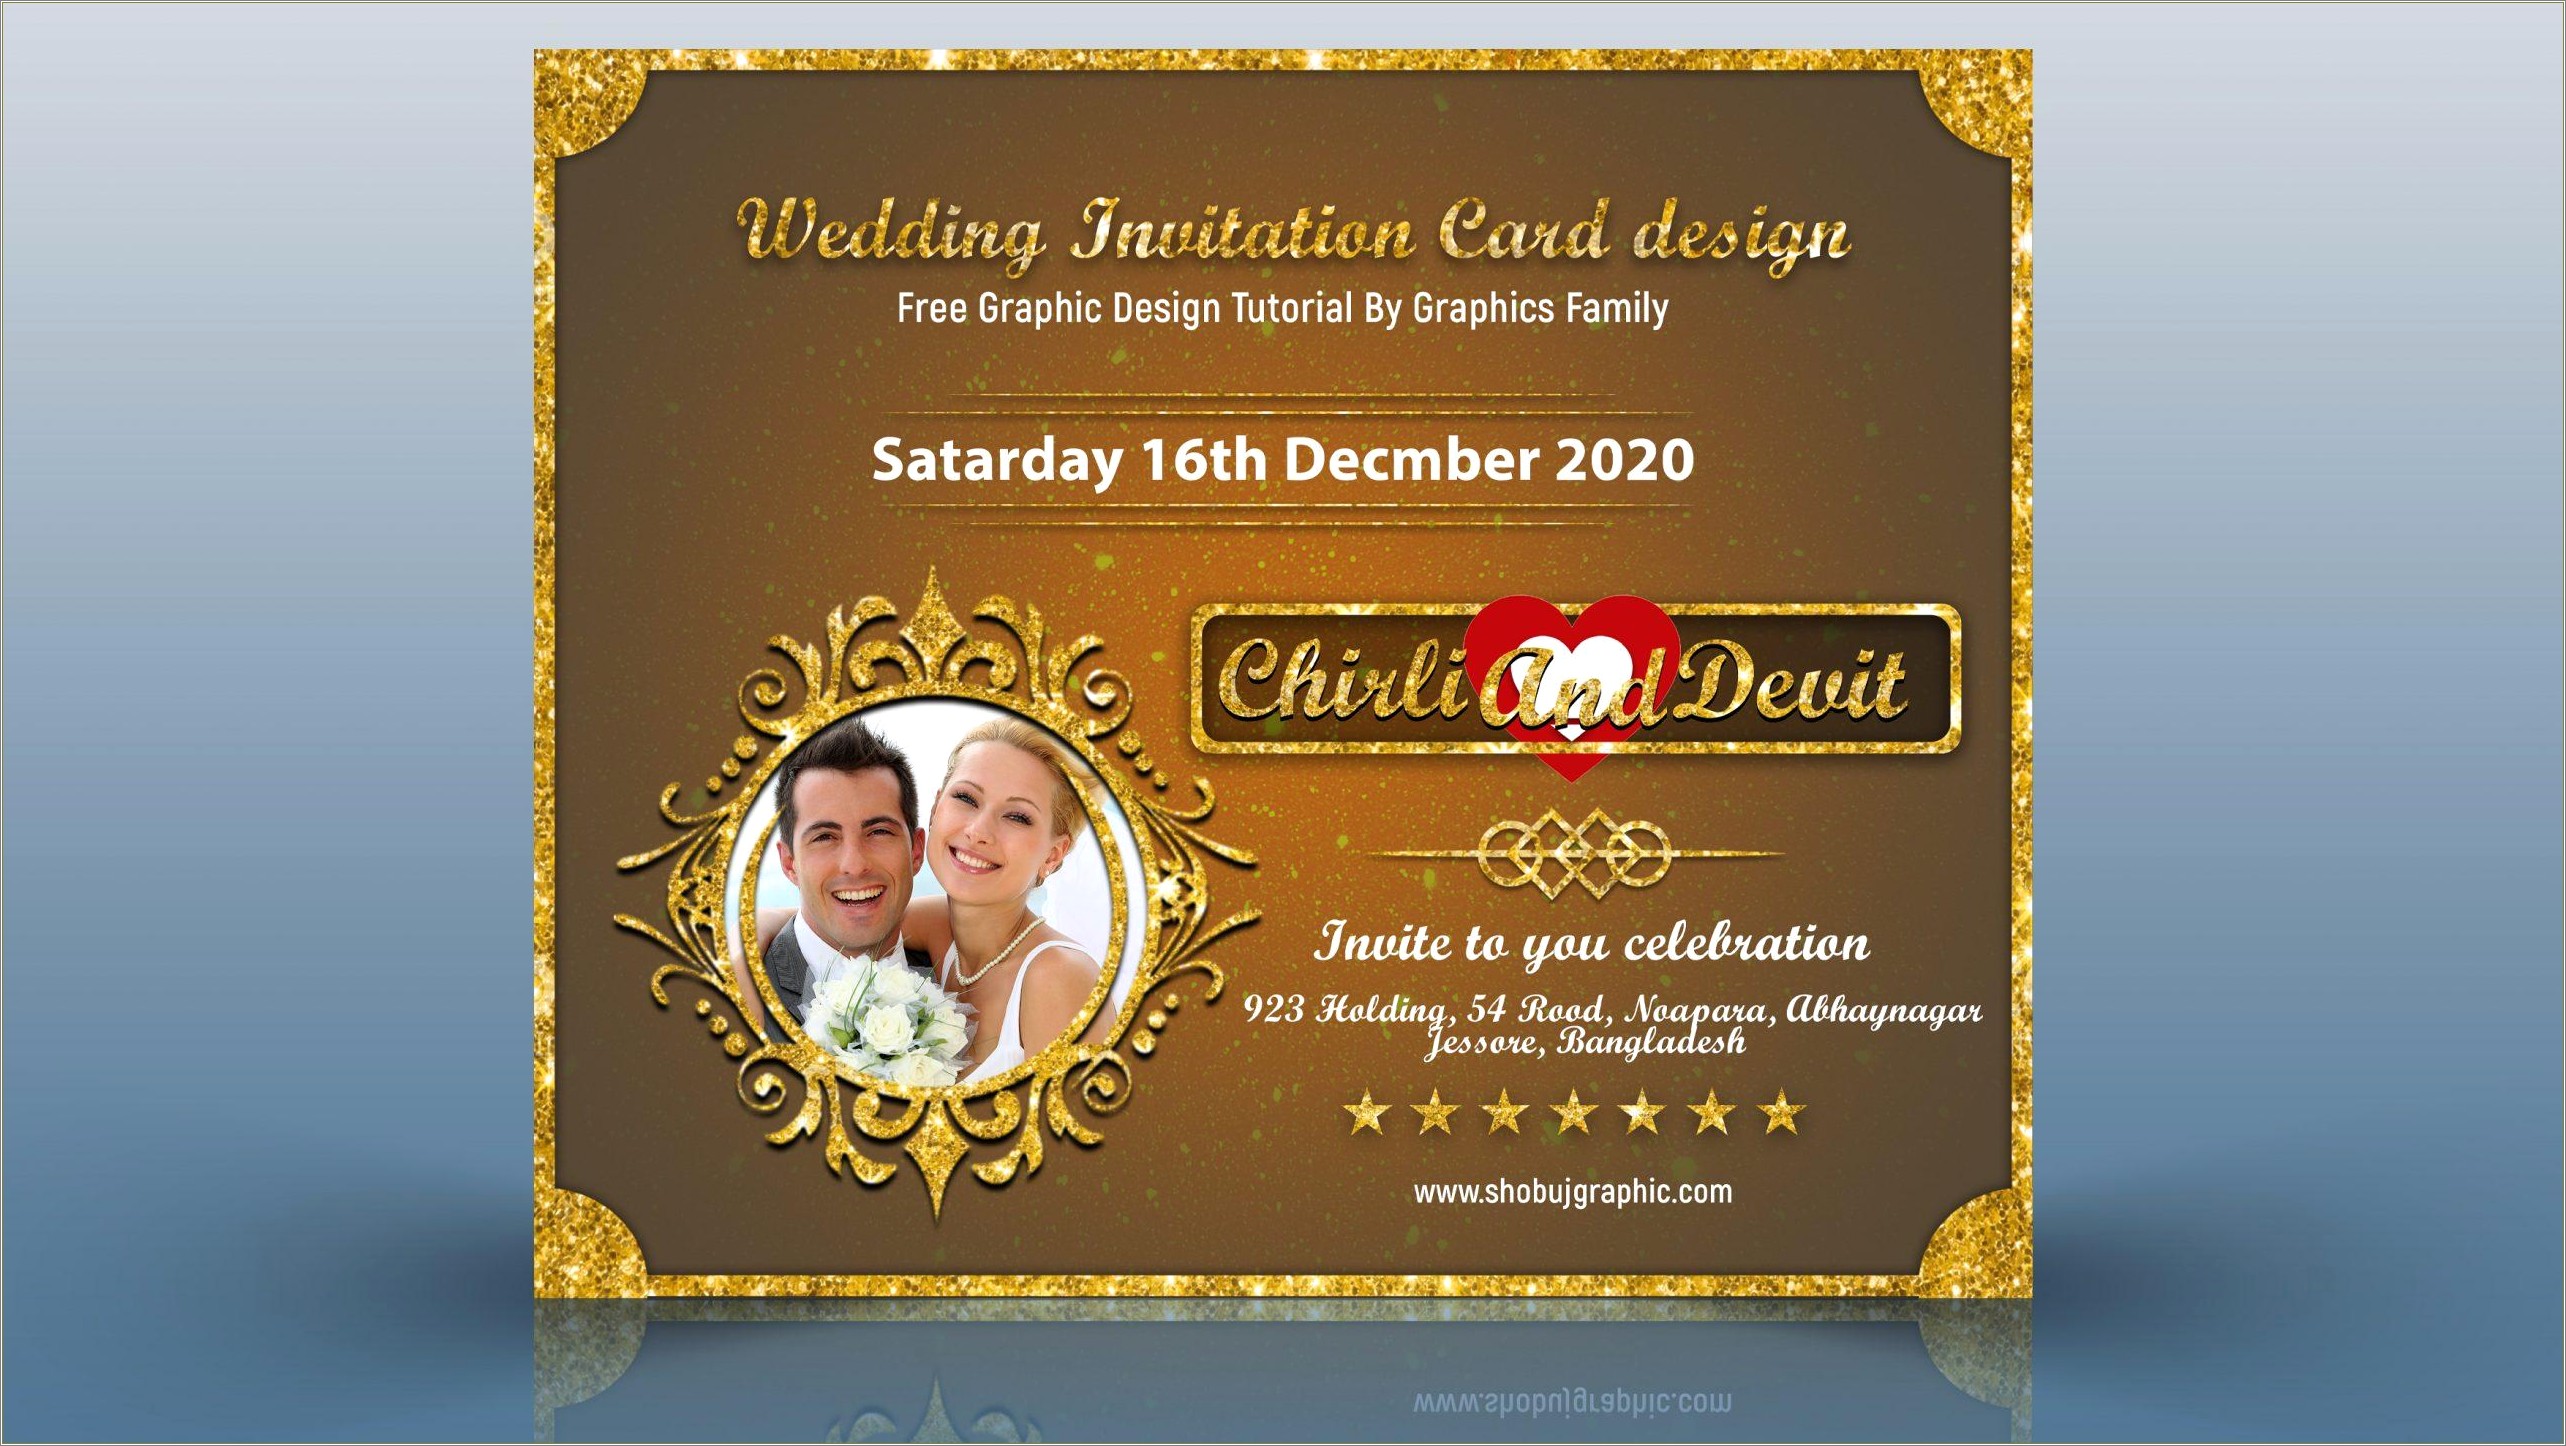 Corporate Invitation Card Design Template Free